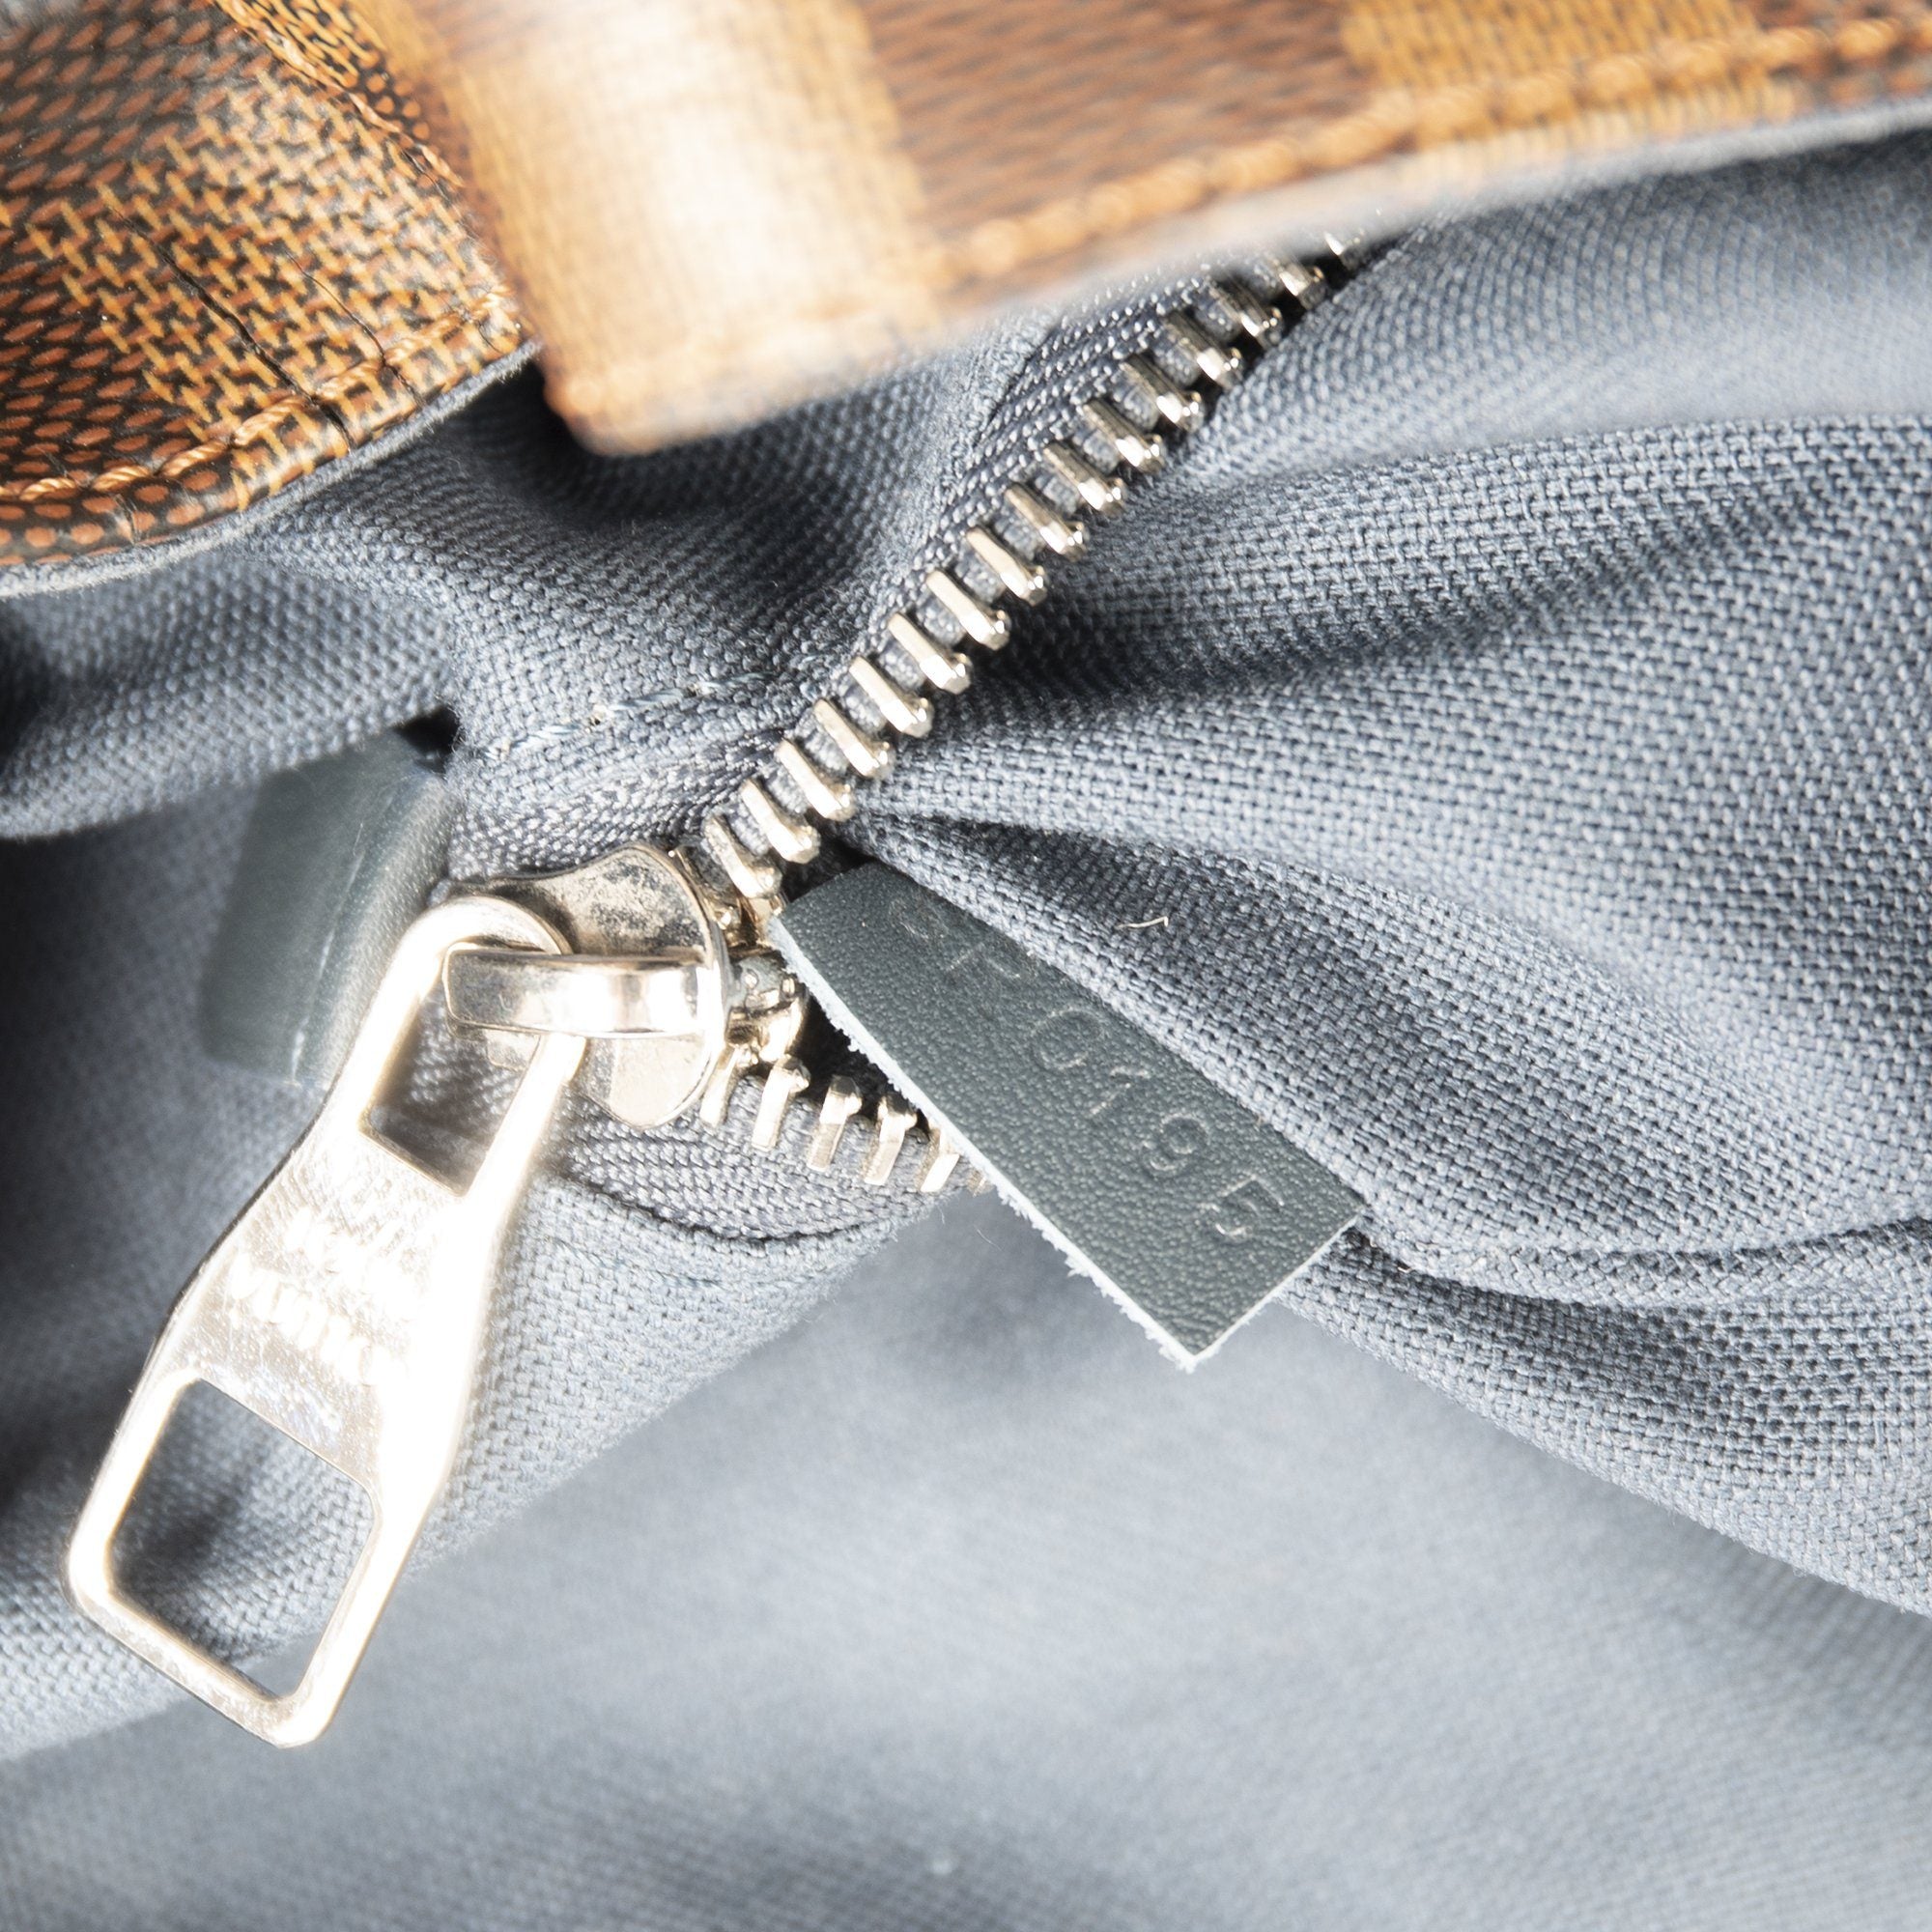 Louis Vuitton Damier Ebene Sac Marin Backpack– Oliver Jewellery